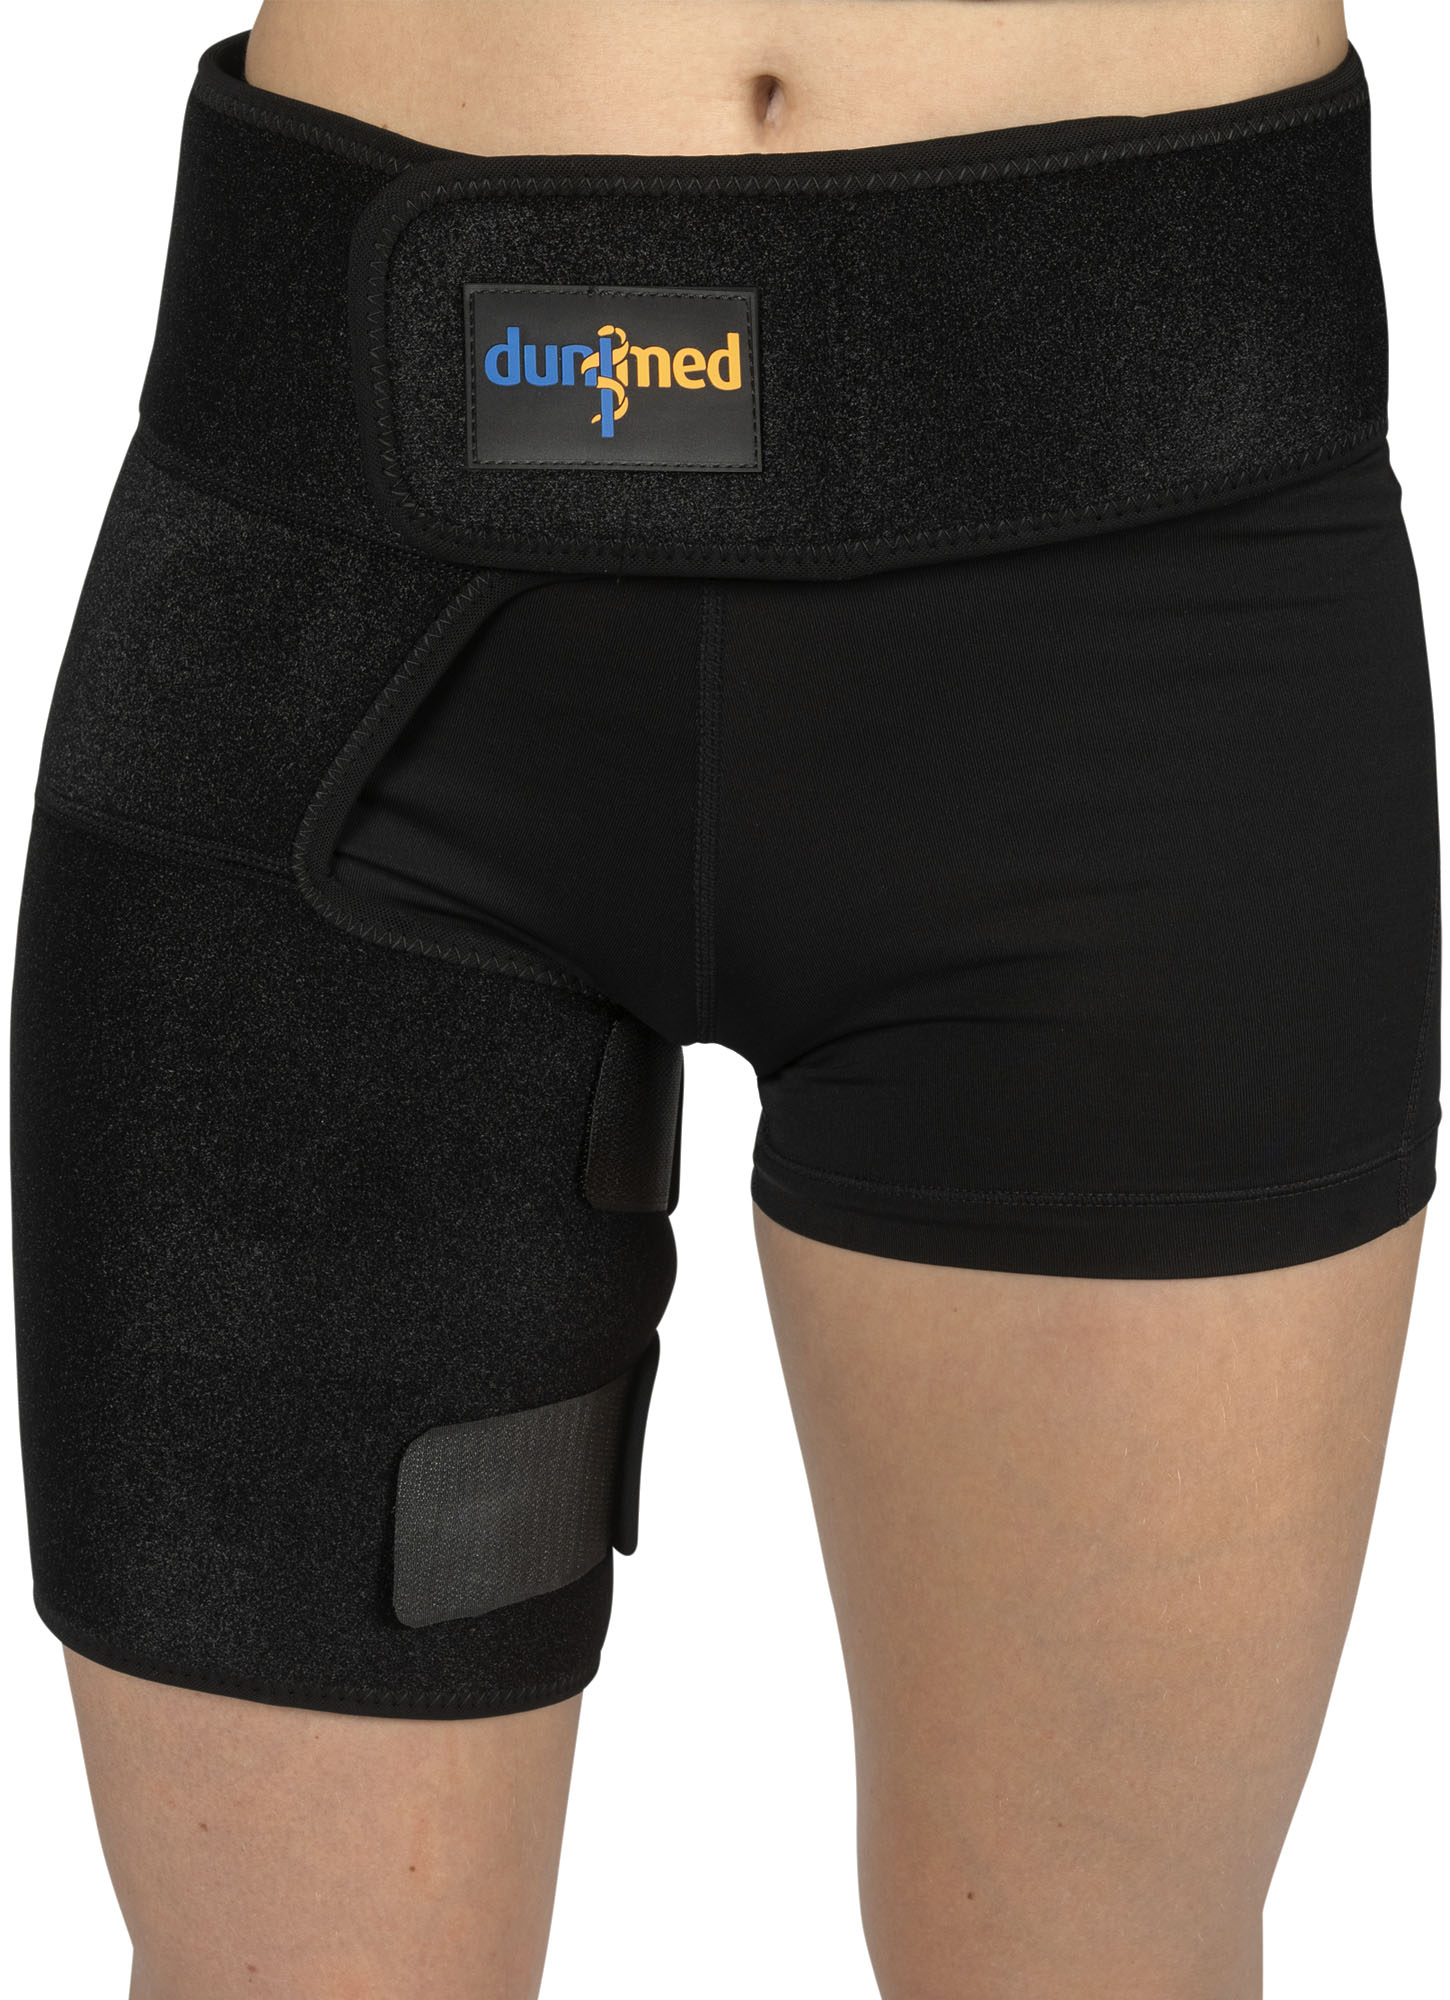 Dunimed Adjustable Hip Brace - Thigh - Groin Support